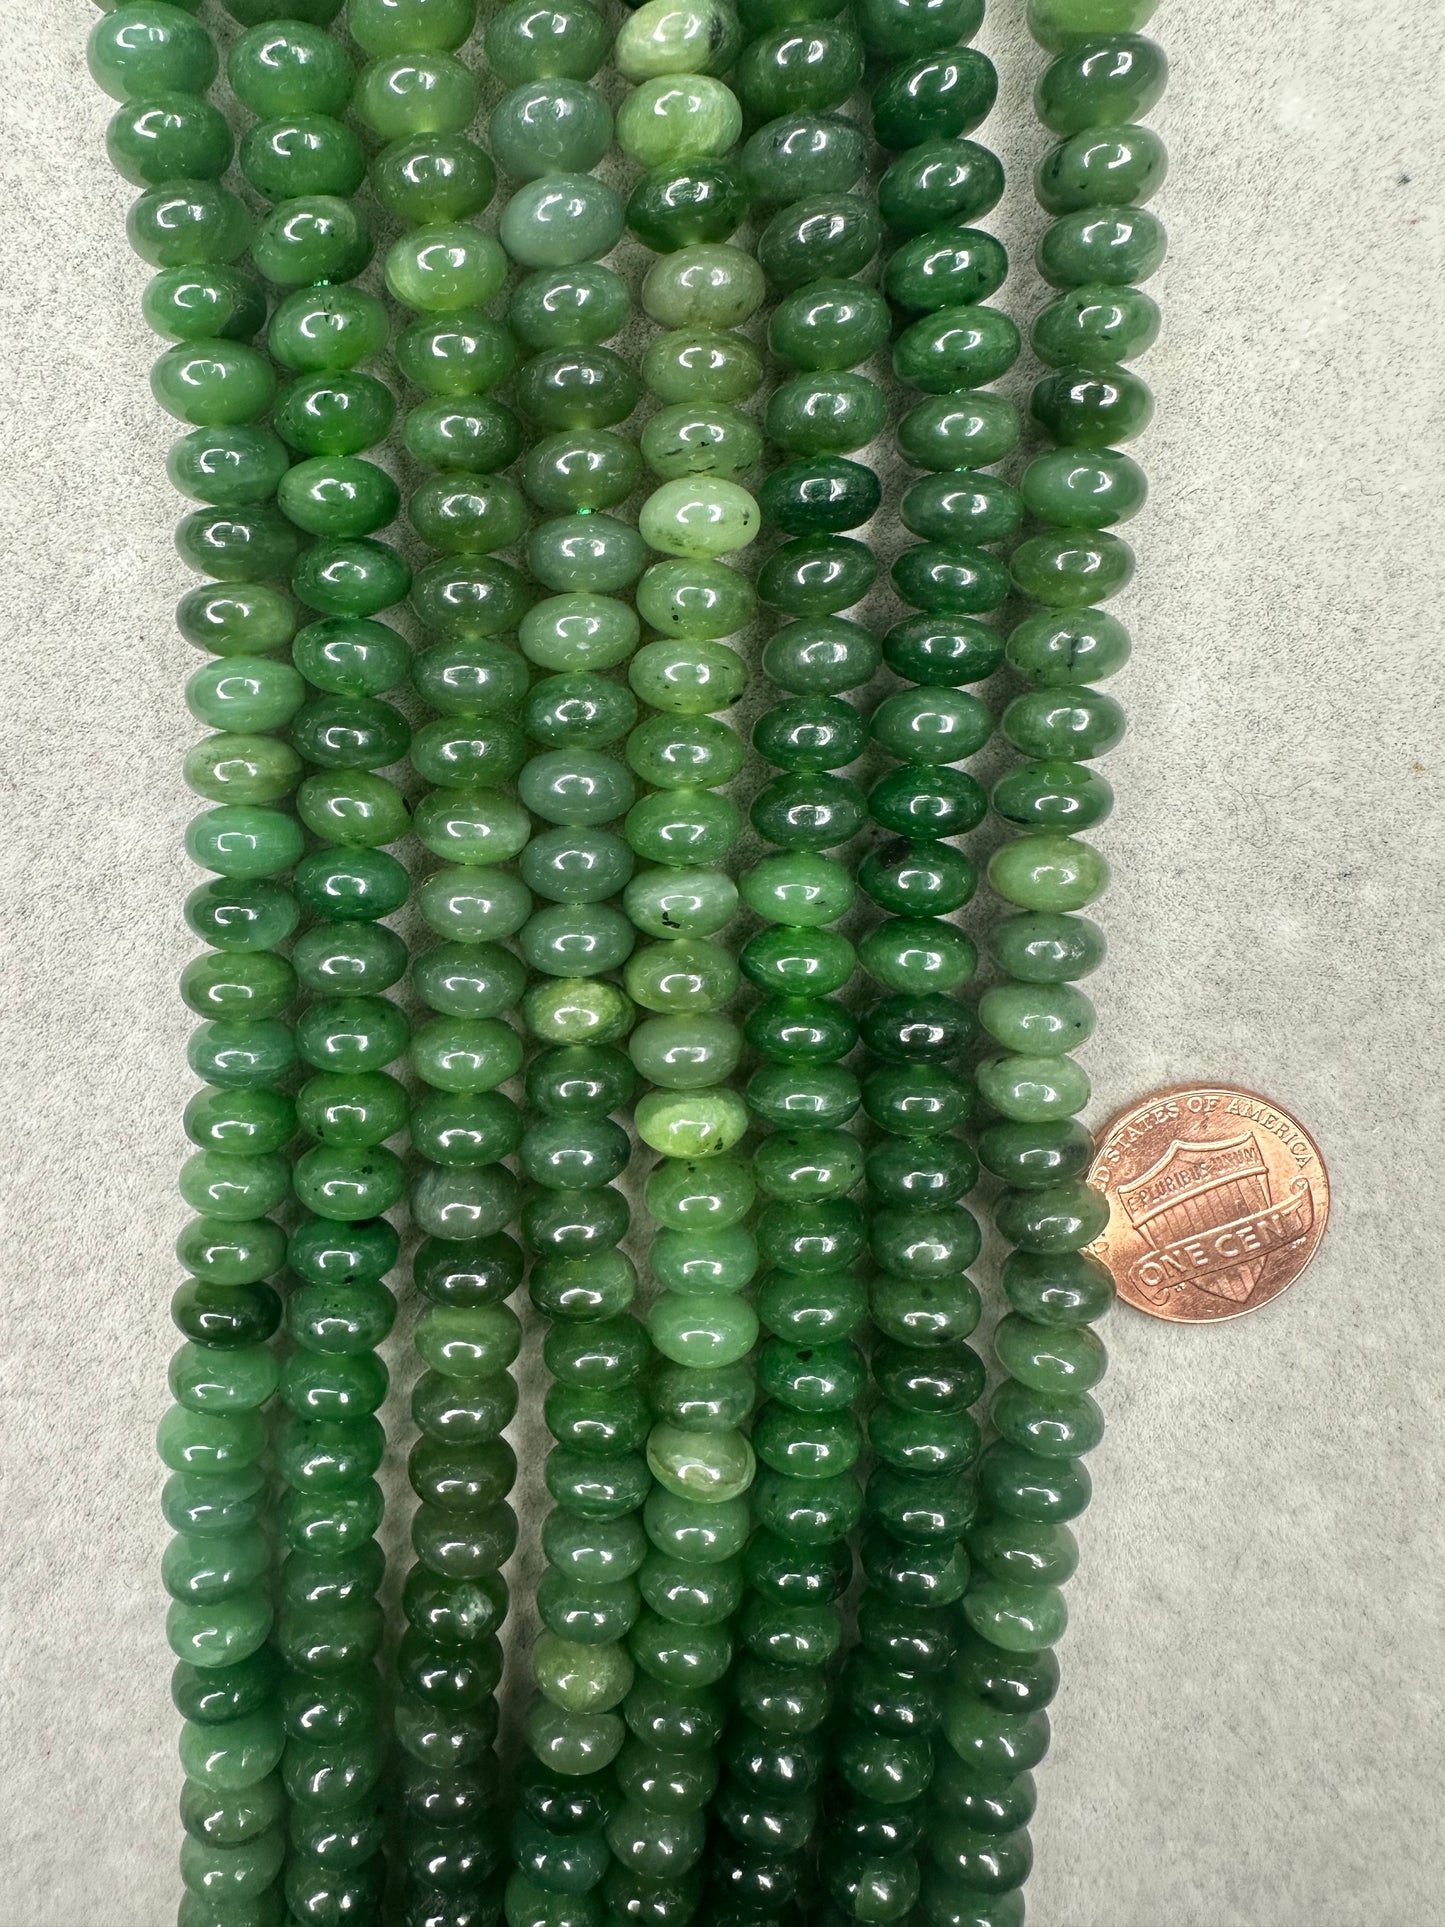 canadian jade rondelle 5mmx8.5mm AAA grade 16"strand